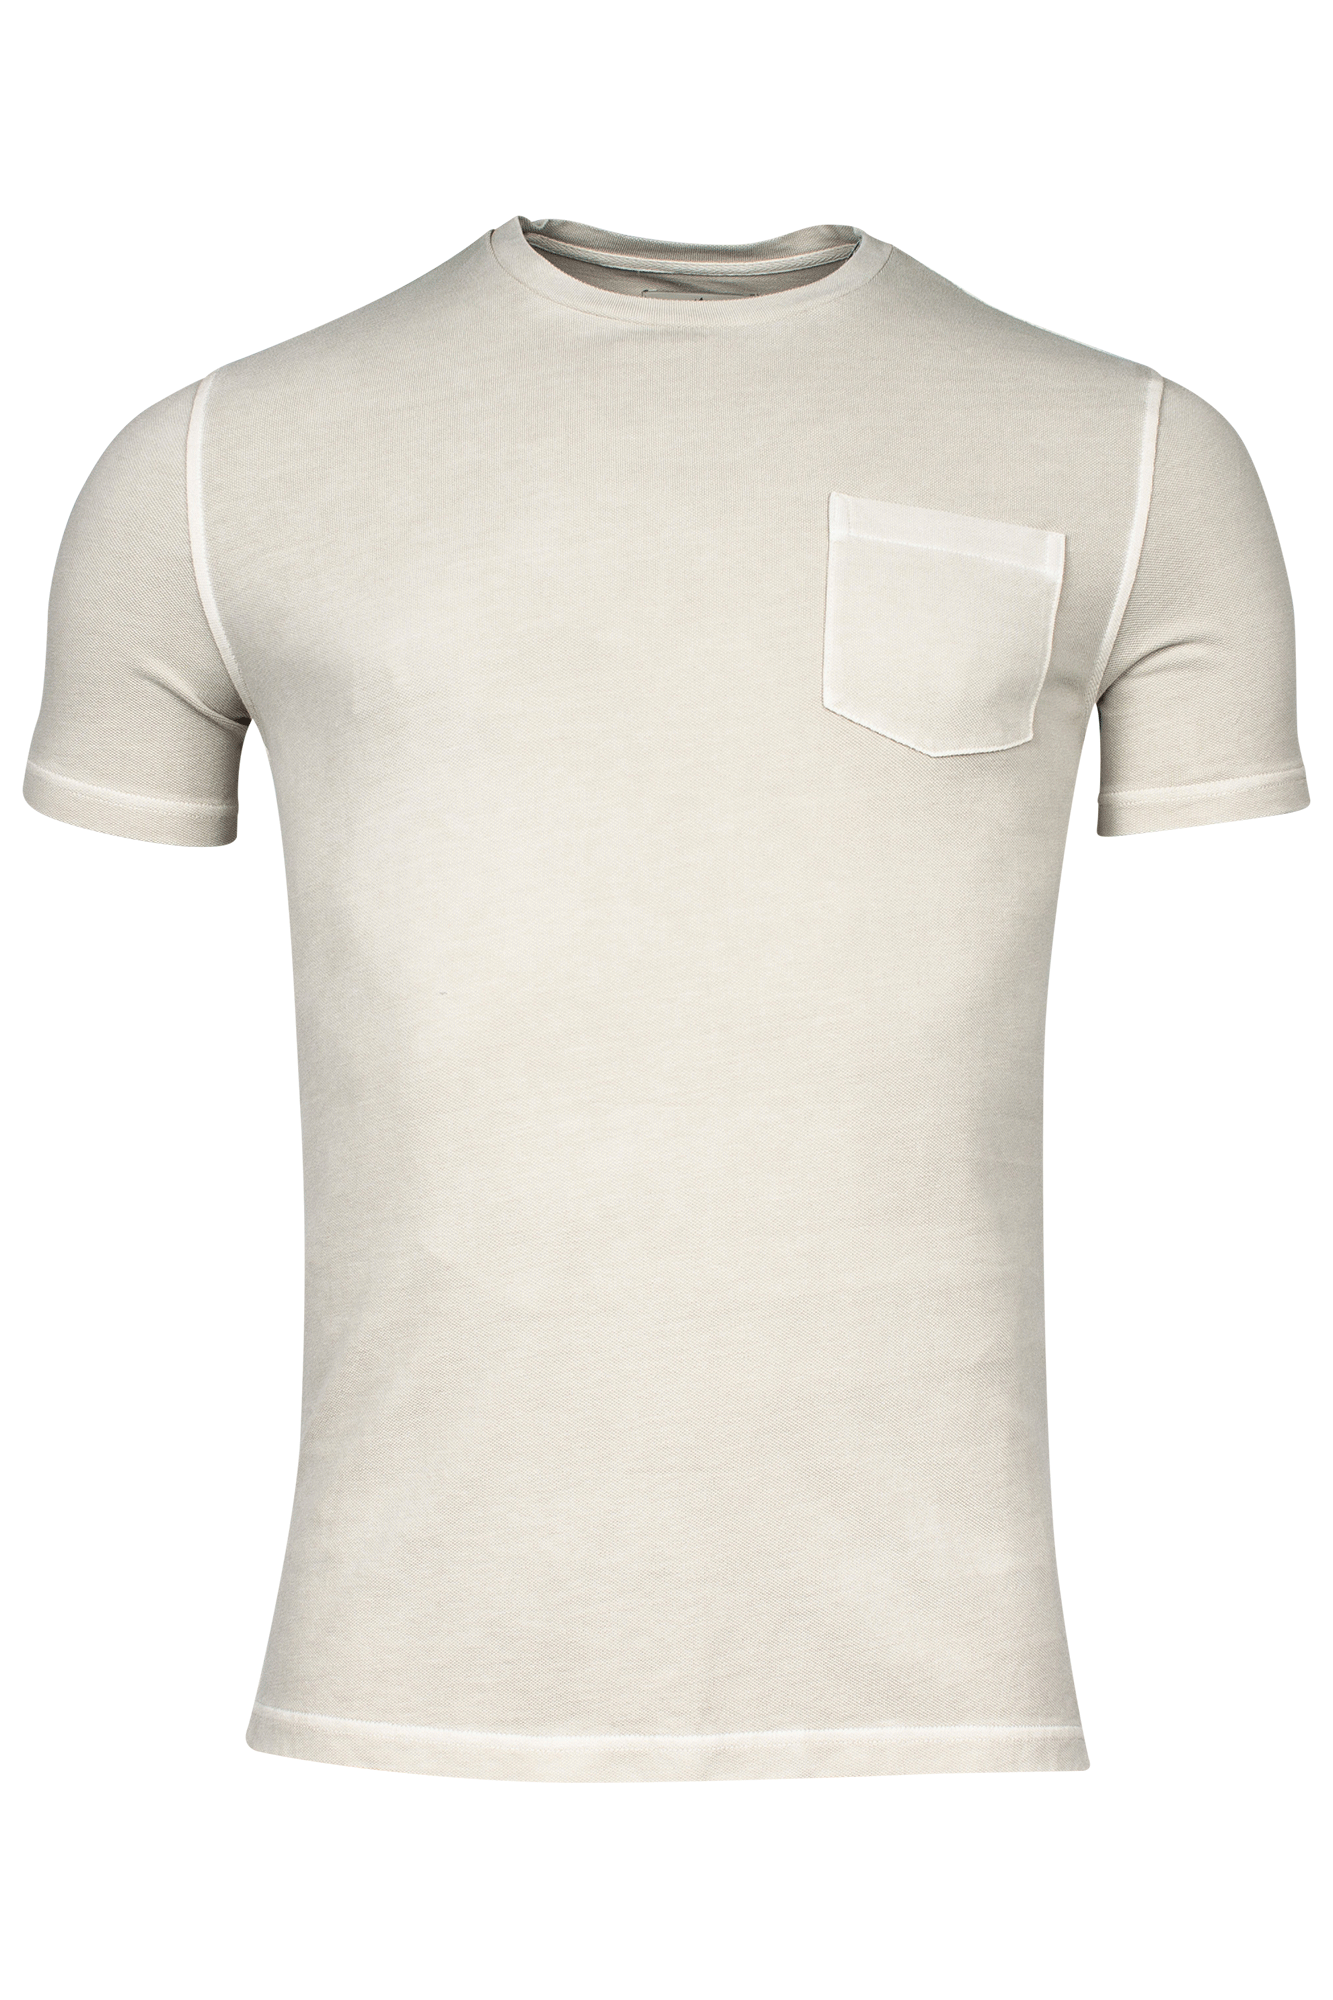 T-Shirt crew neck+chest pocket/ Short Sleeves